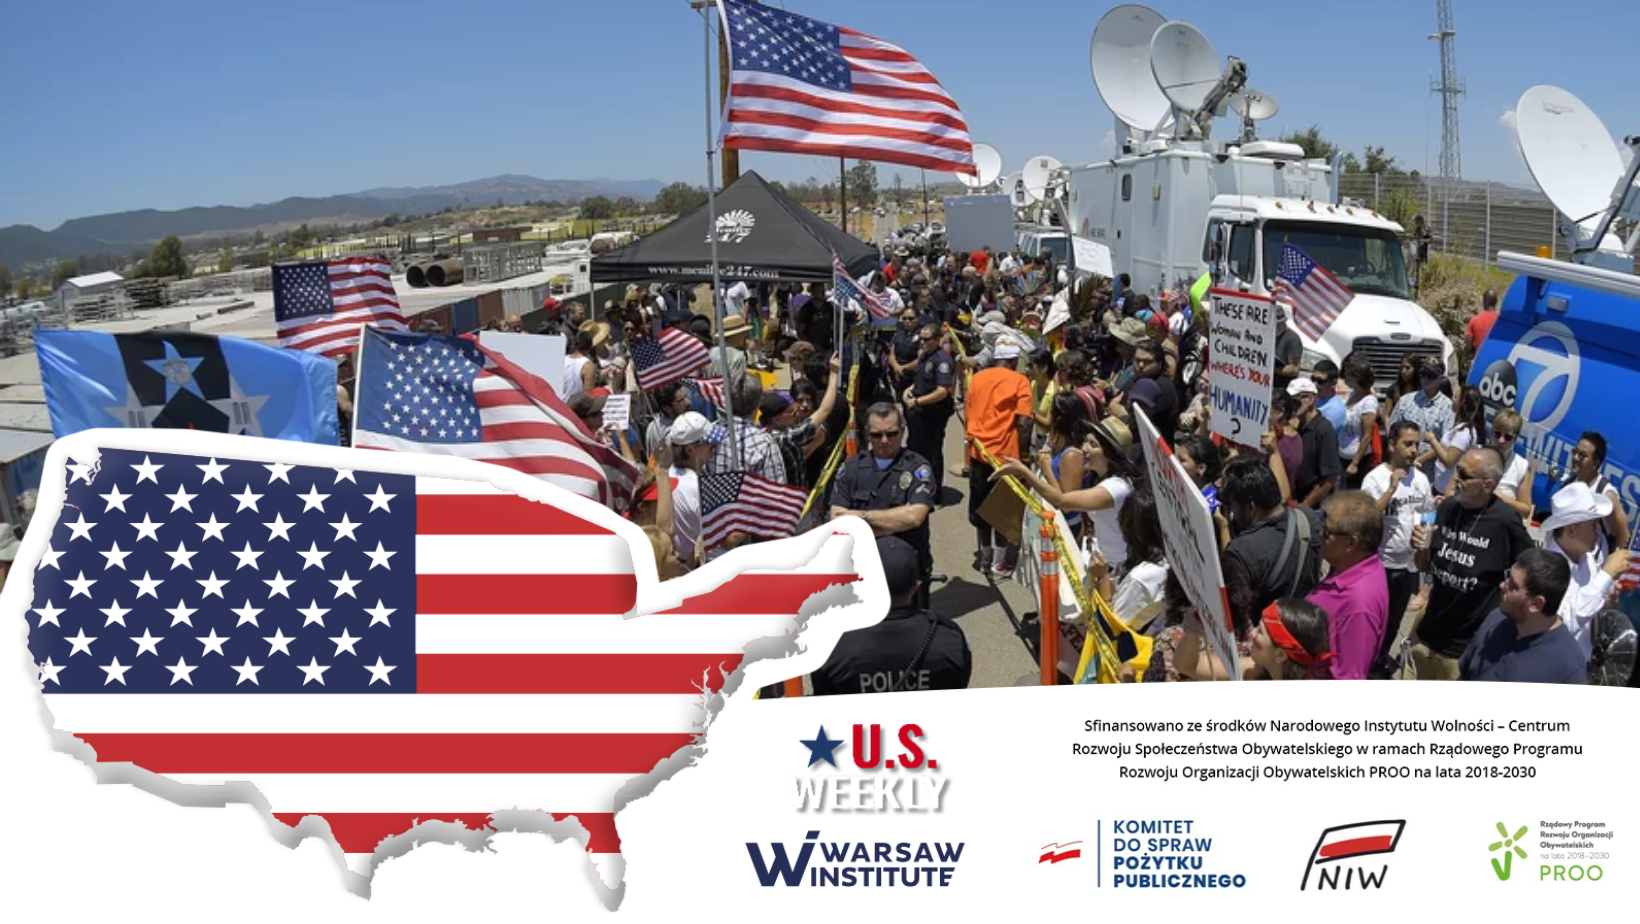 The U.S. Immigration Crisis Dominates a Domestic Political Debate